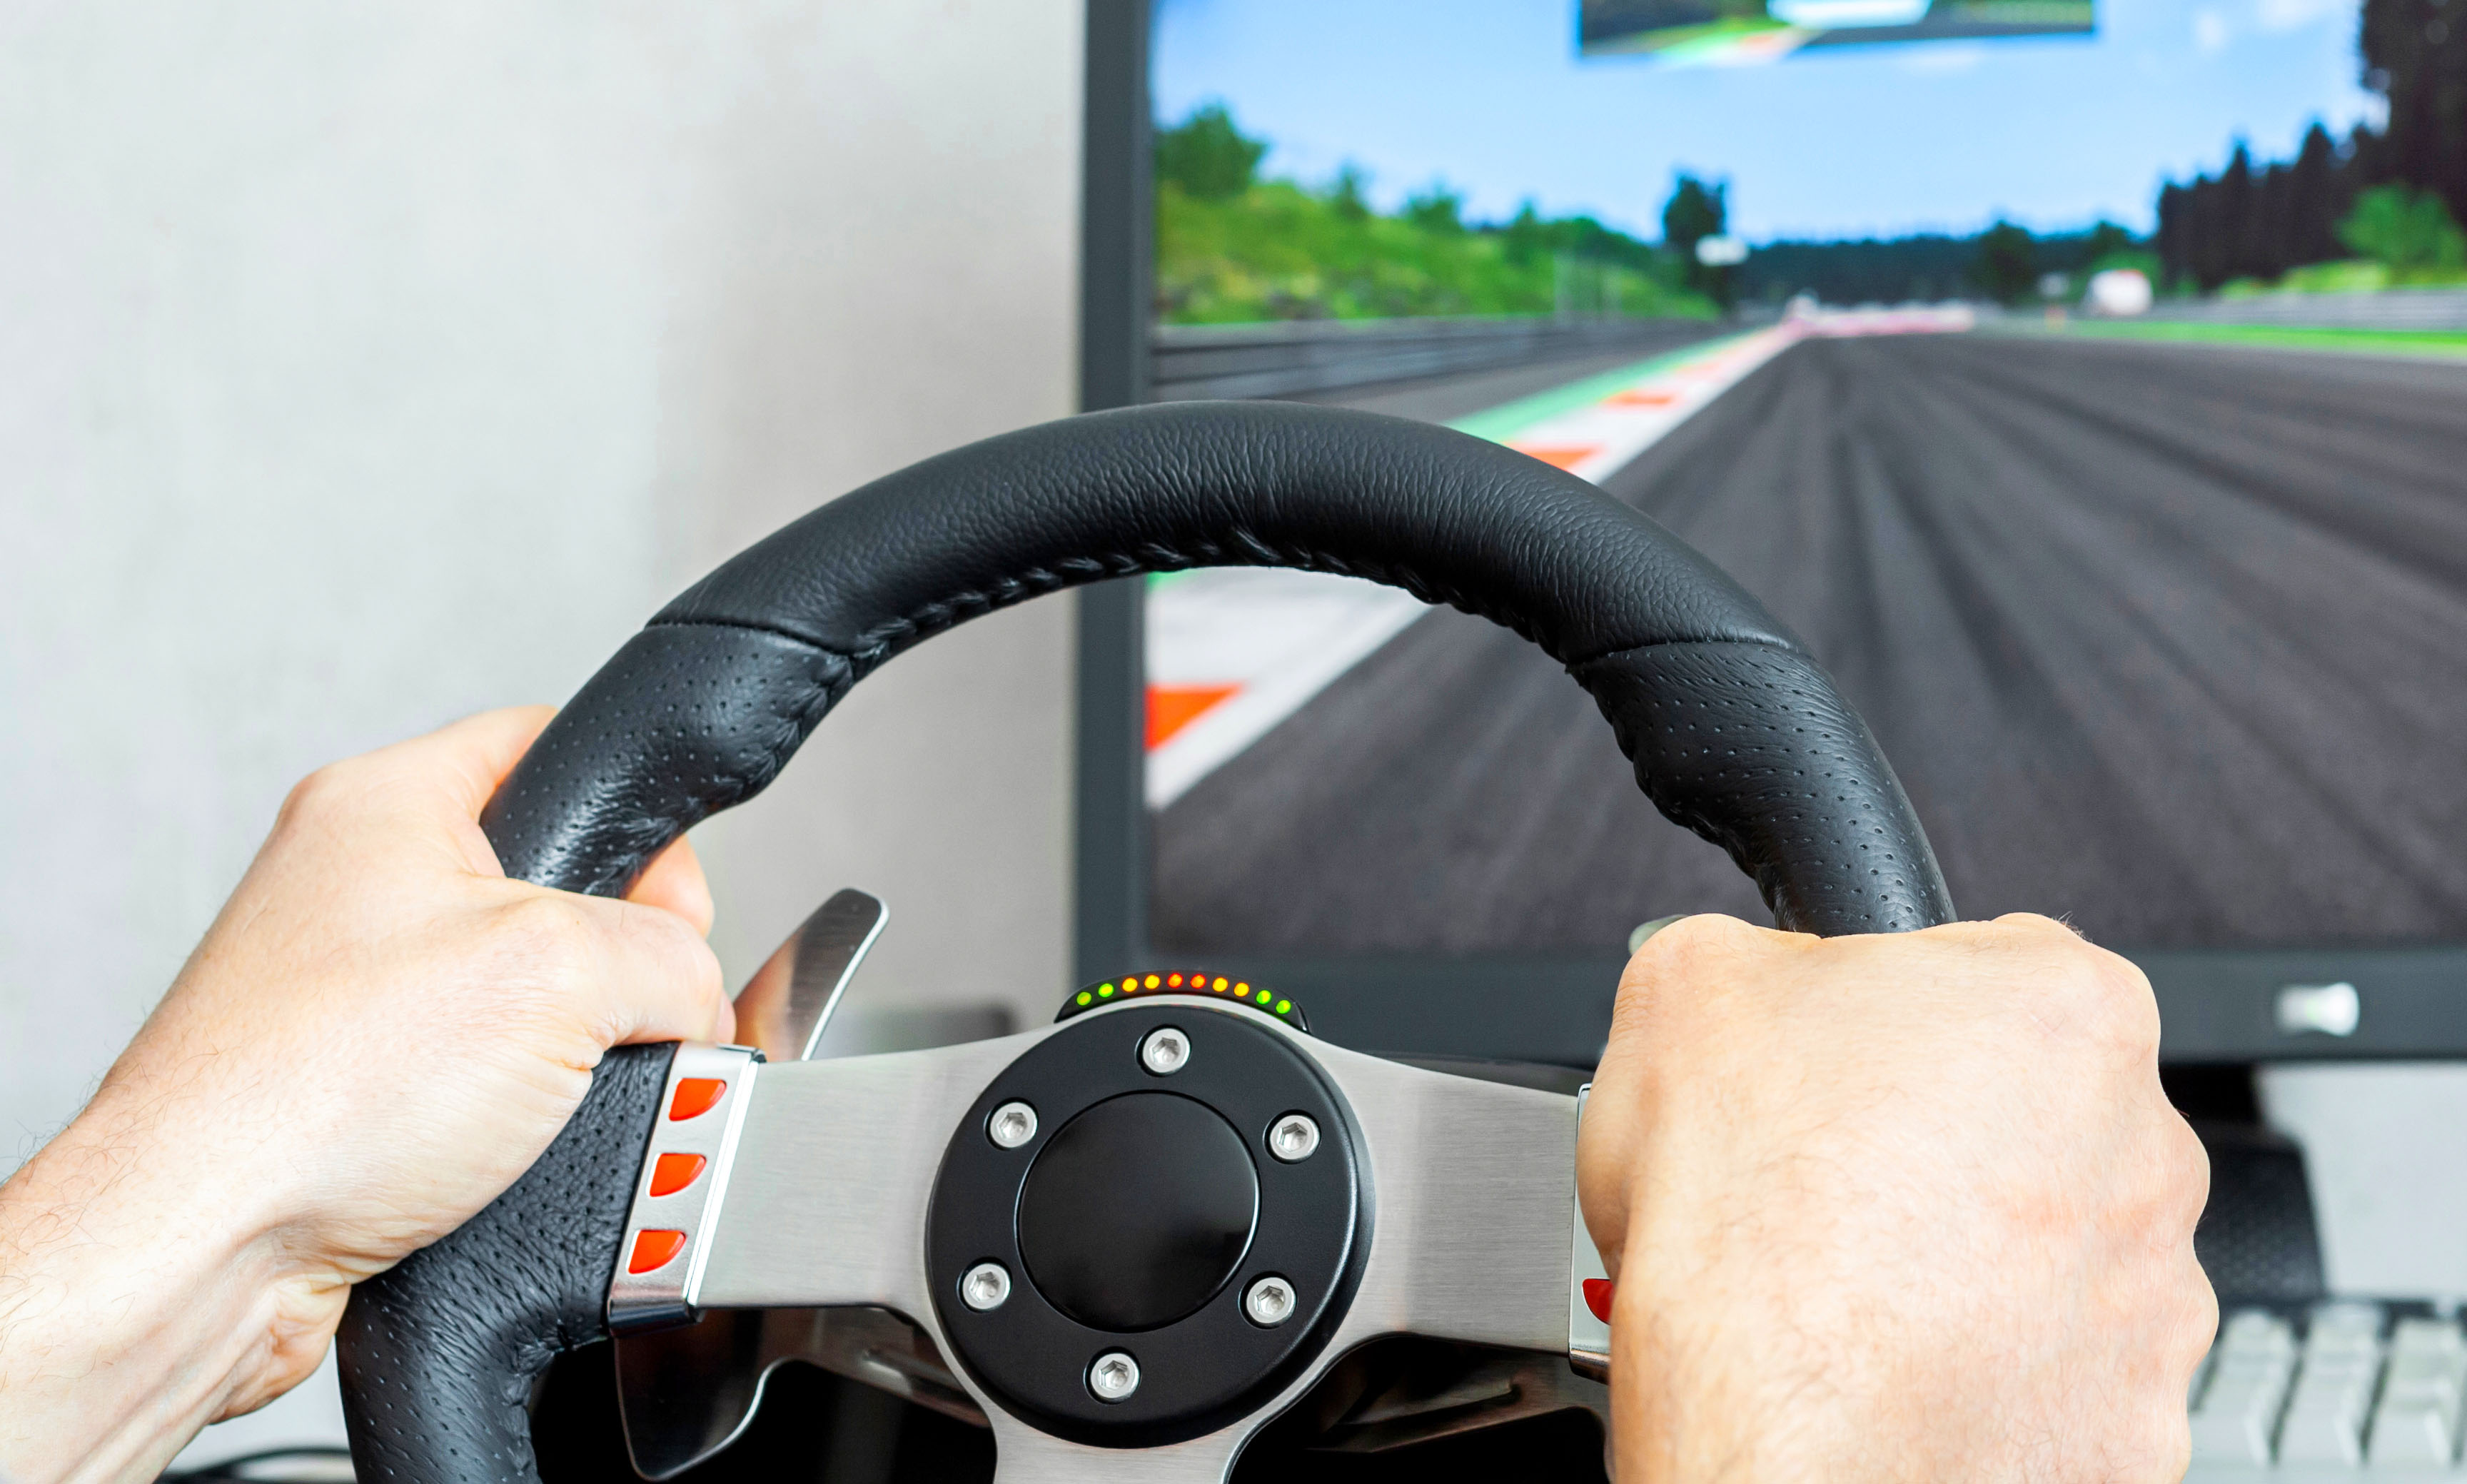 Logitech G Gaming-Lenkrad »PS4 G29 Driving Force + Gran Tourismo 7